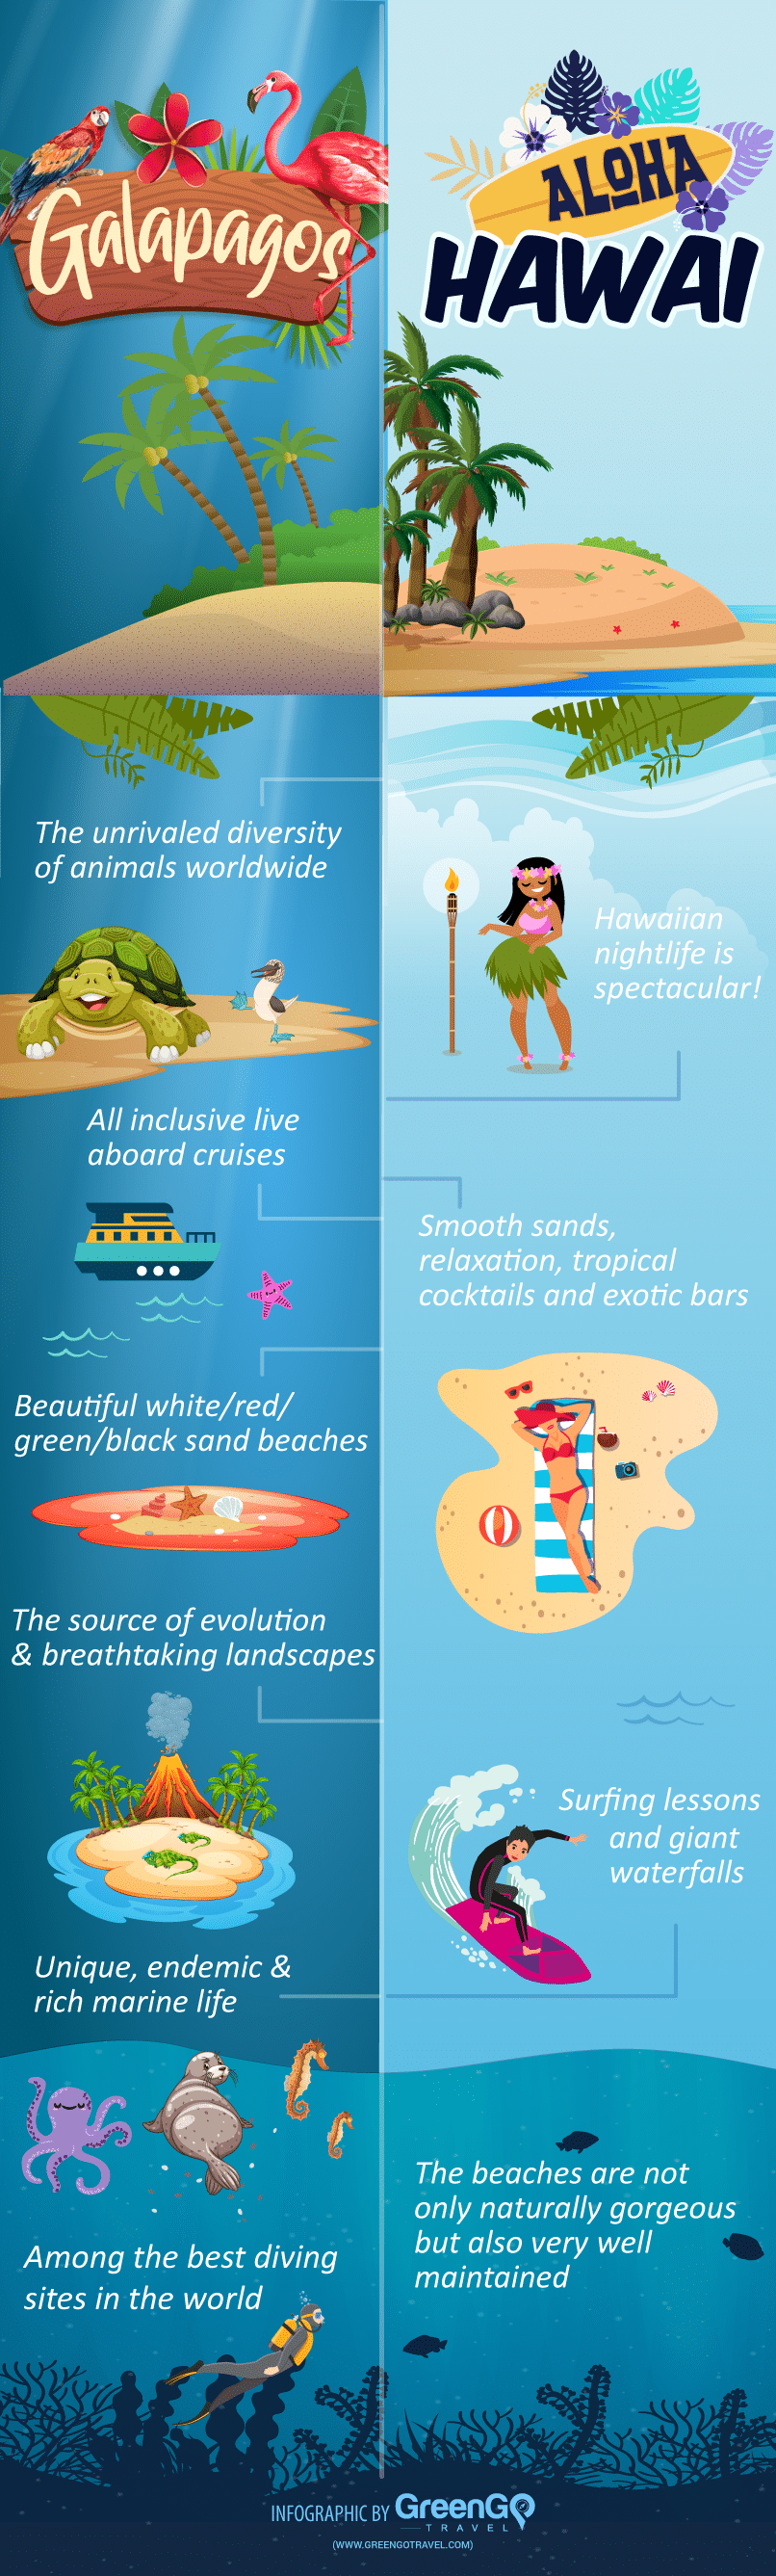 Galapagos vs hawaii infographic